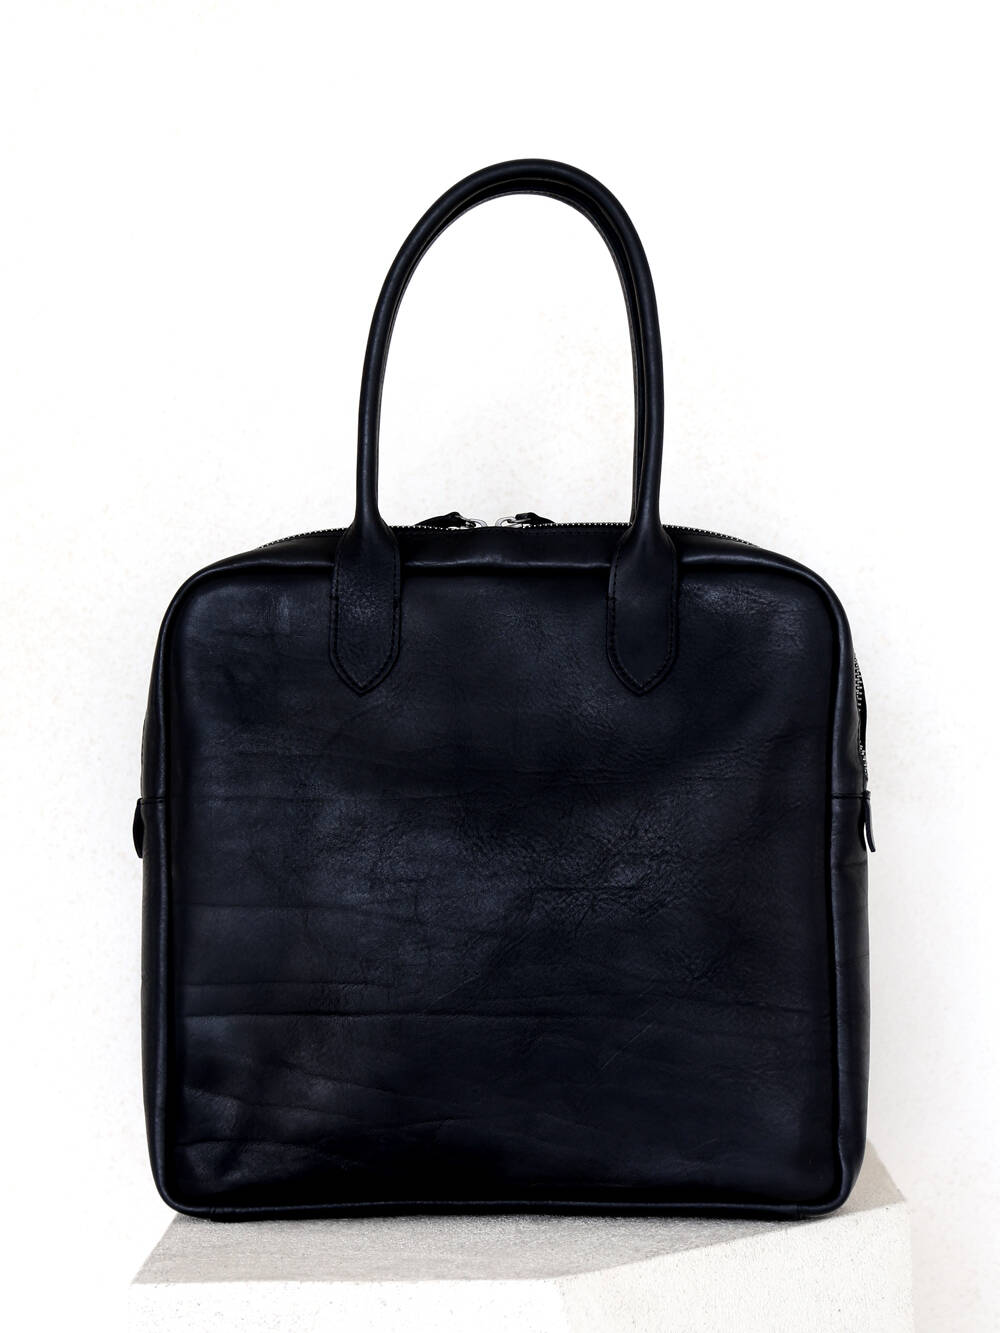 Home - Corîu - Leather Bags